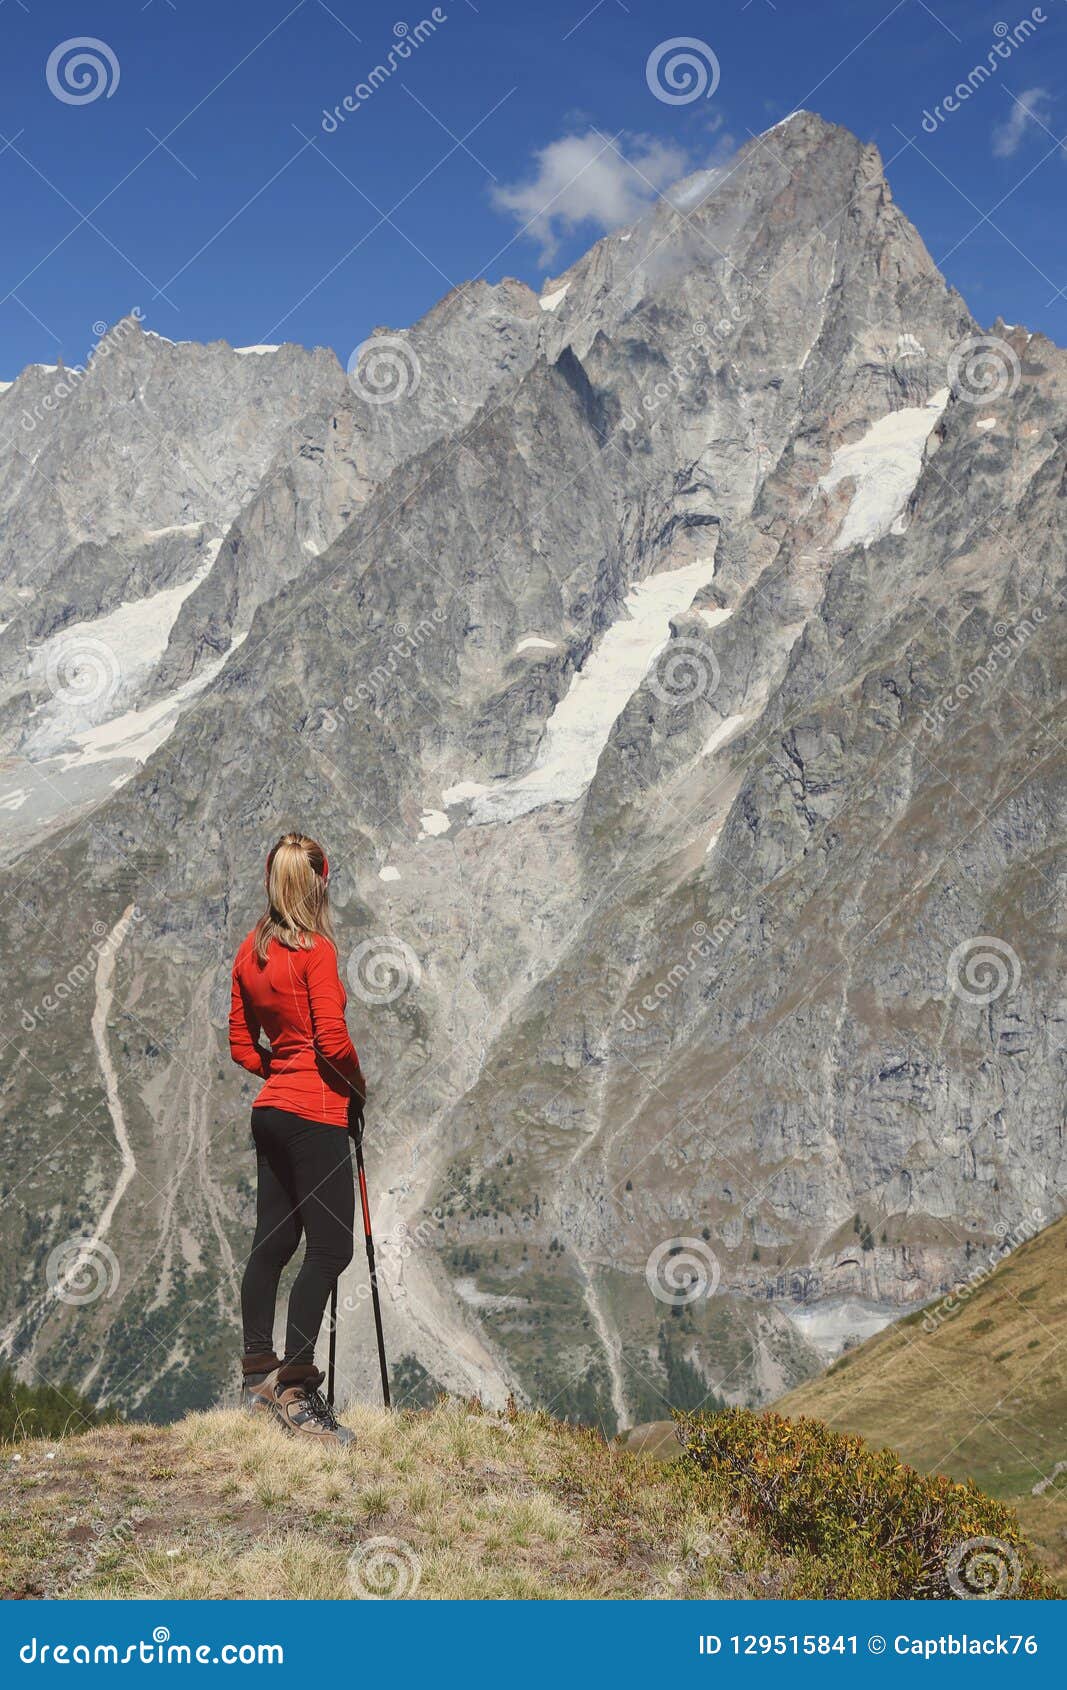 hiker woman looking at mountain